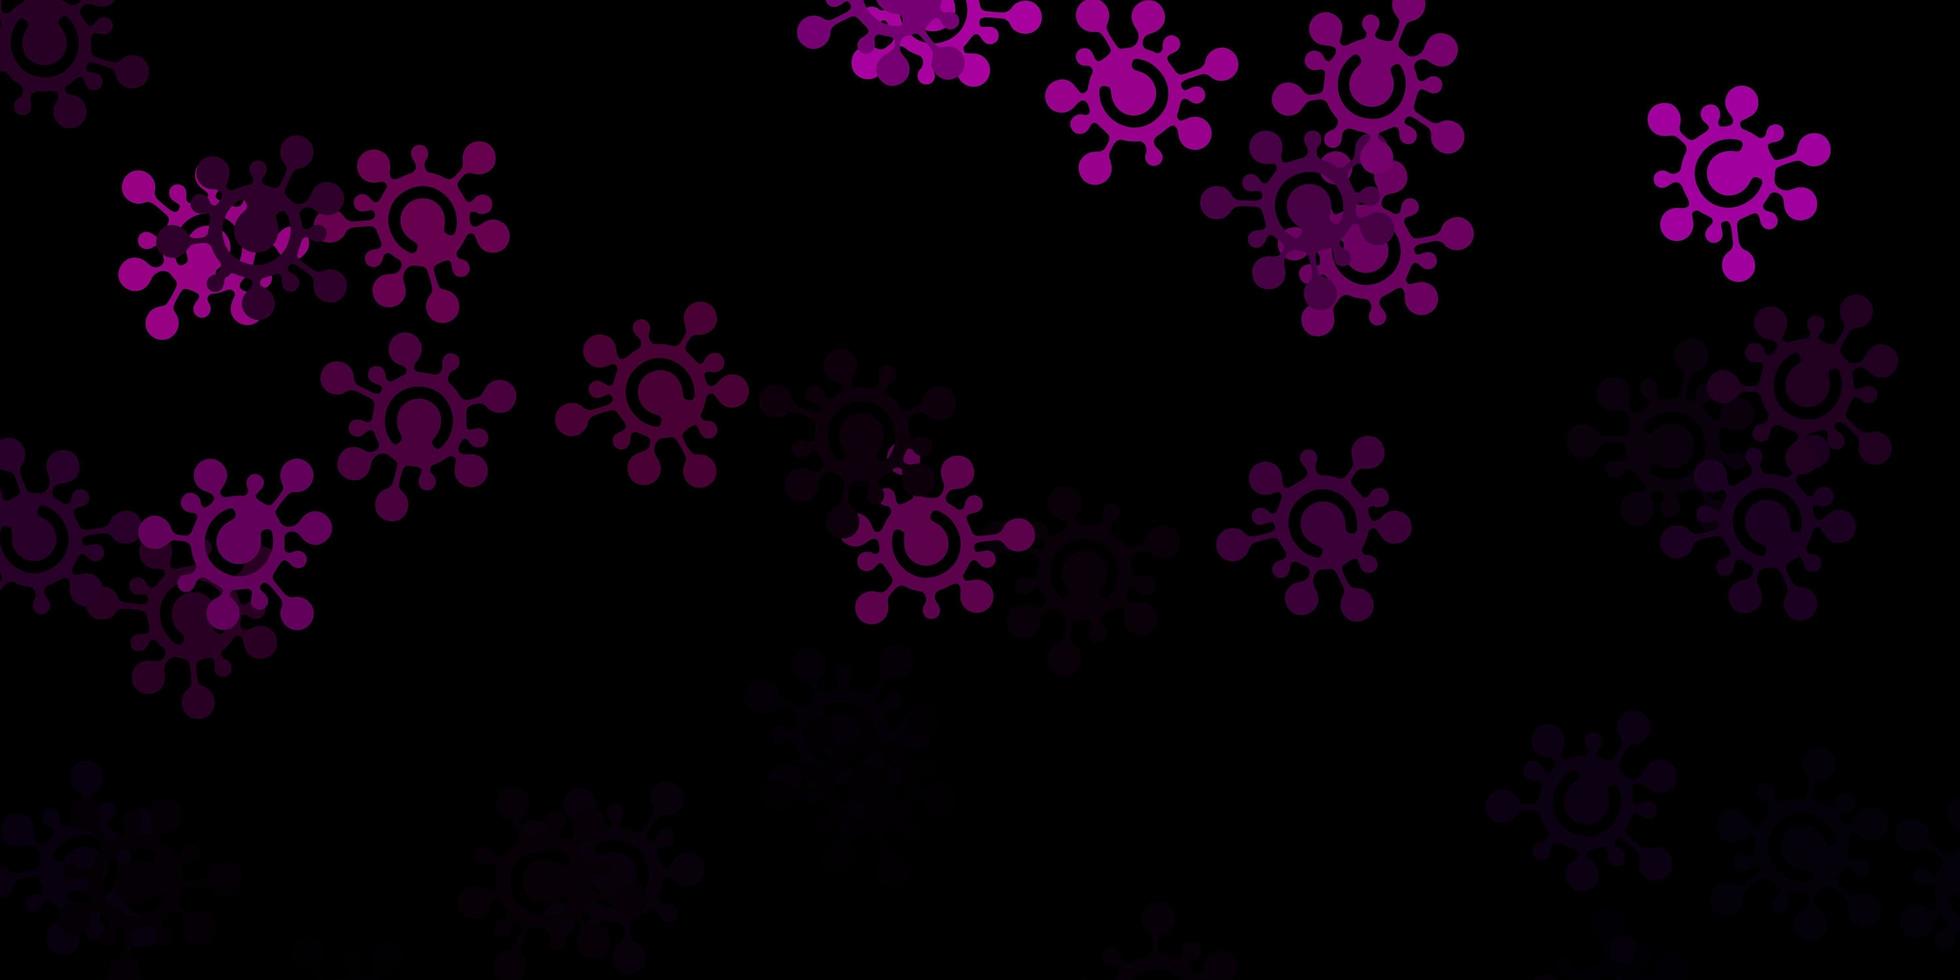 textura de vector de color rosa oscuro con símbolos de enfermedades.